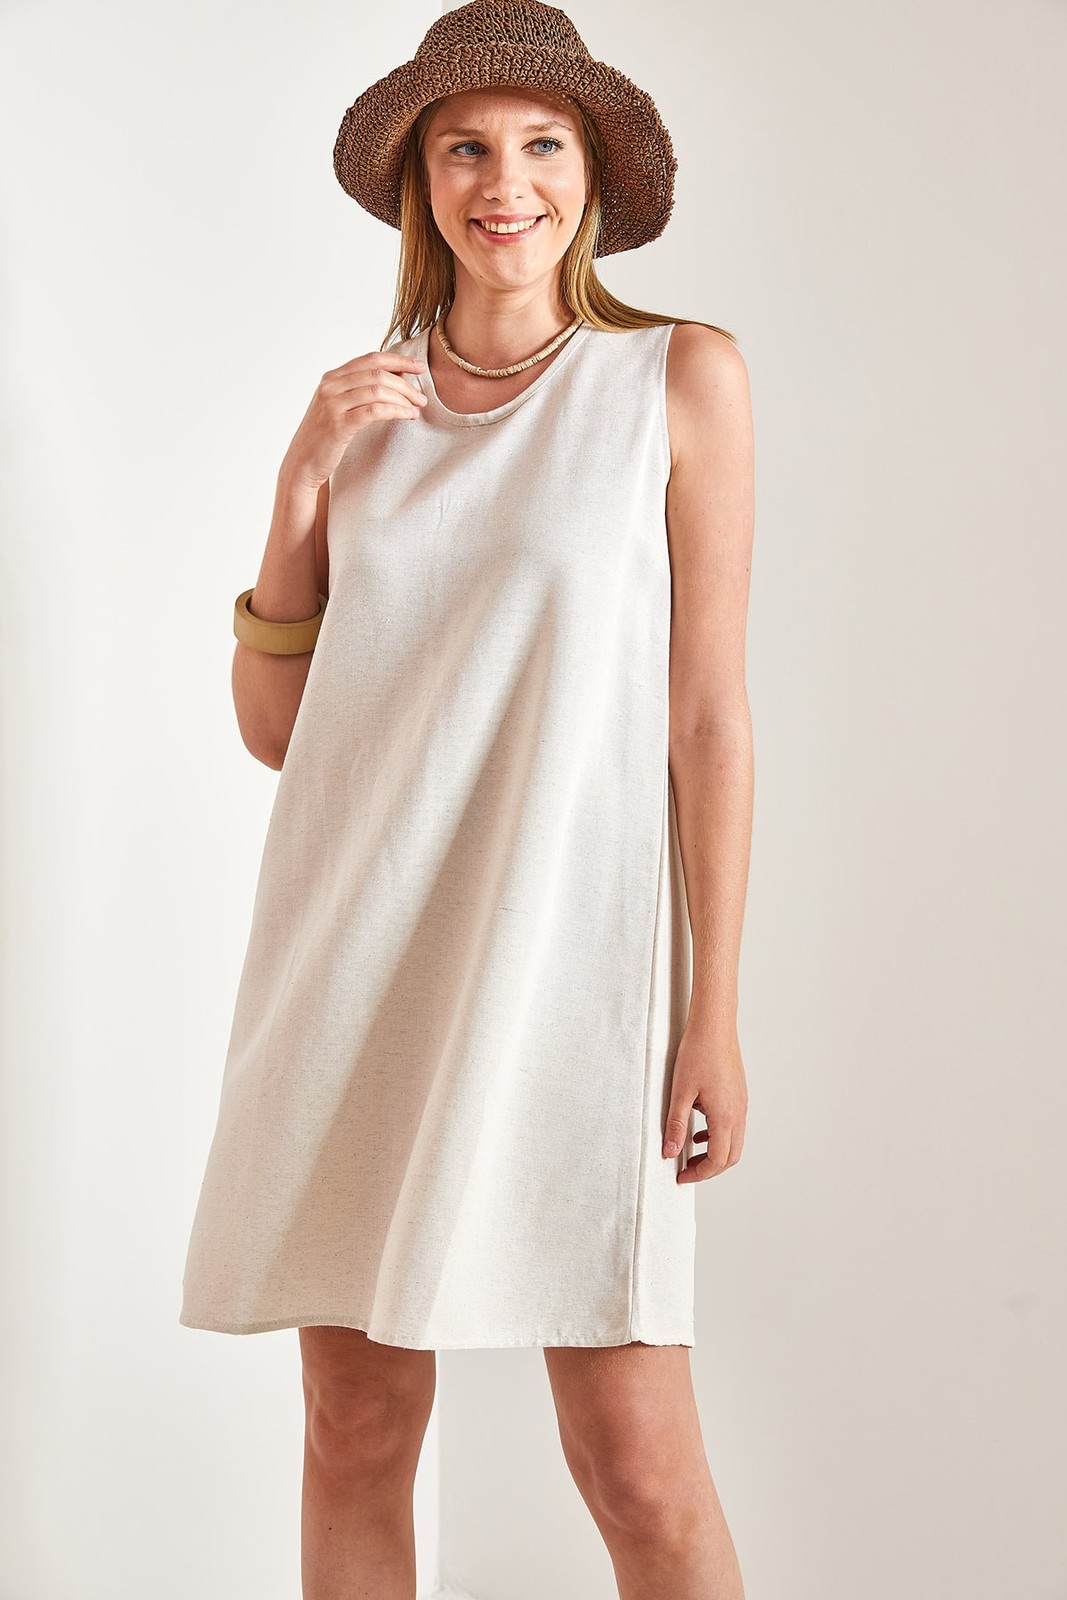 Bianco Lucci Women's Backless Linen Dress